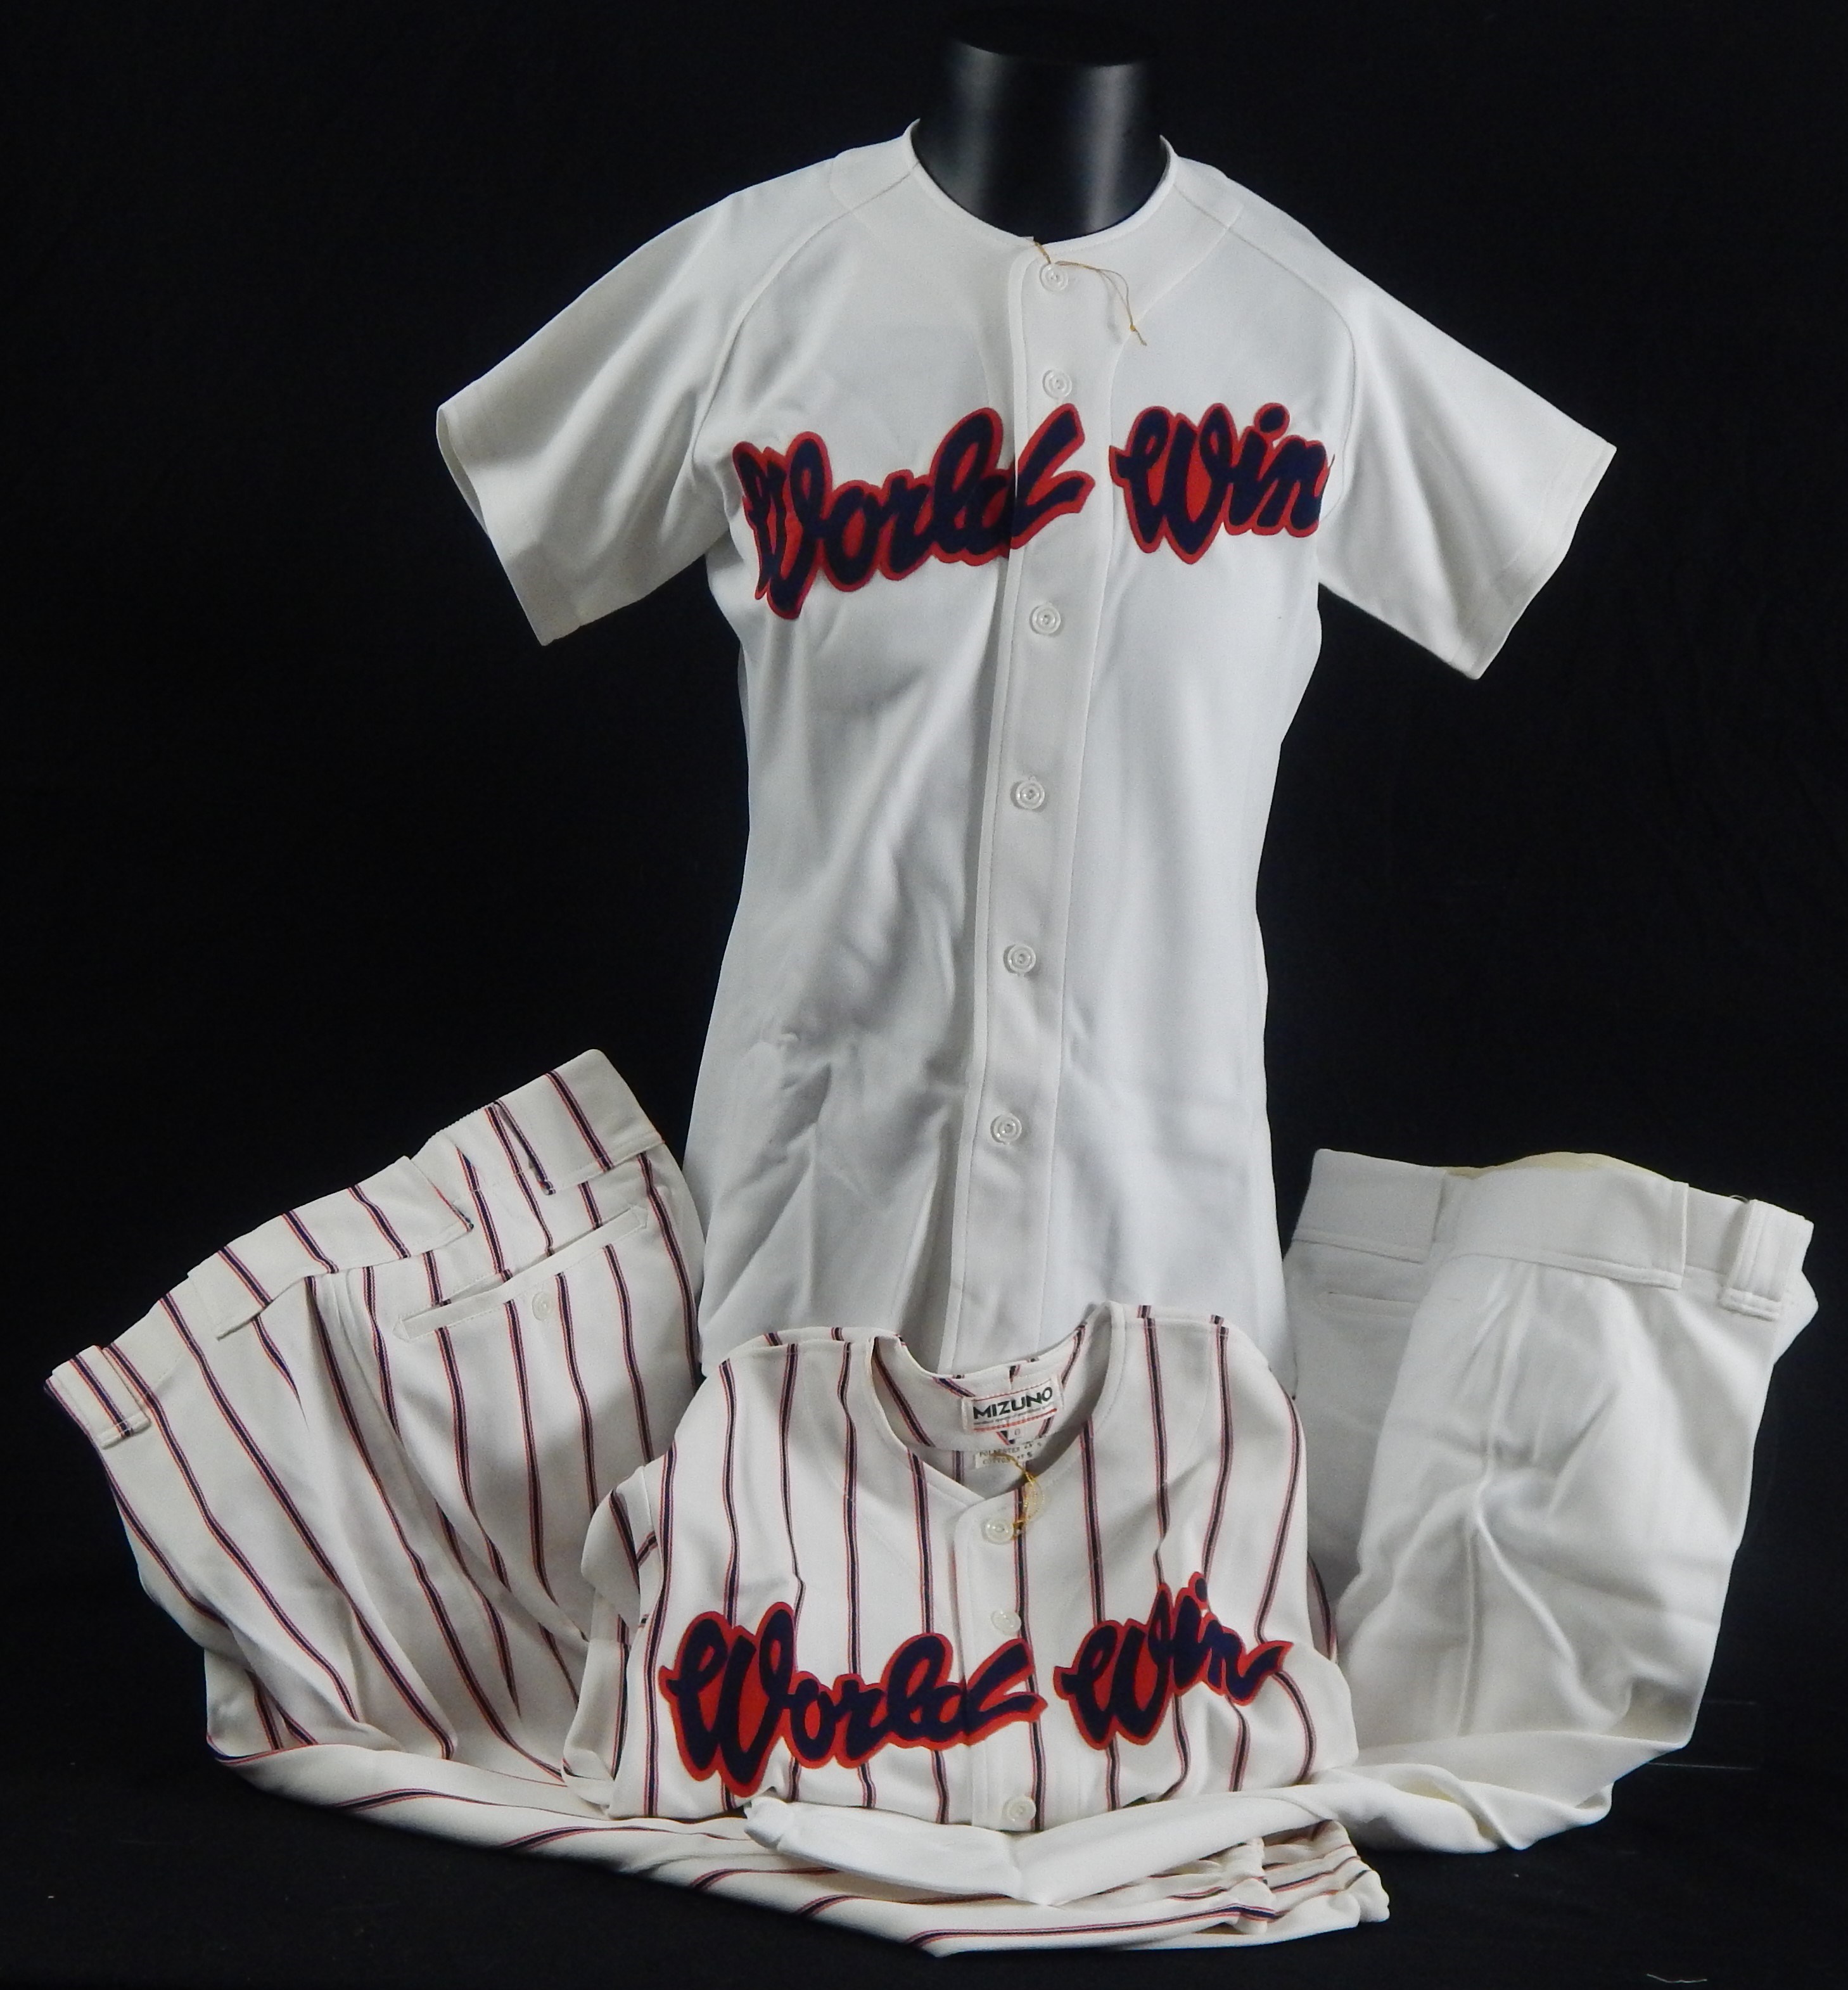 Baseball Jerseys - 1970's Mizuno World Win Salesman's Sample Uniforms (2)